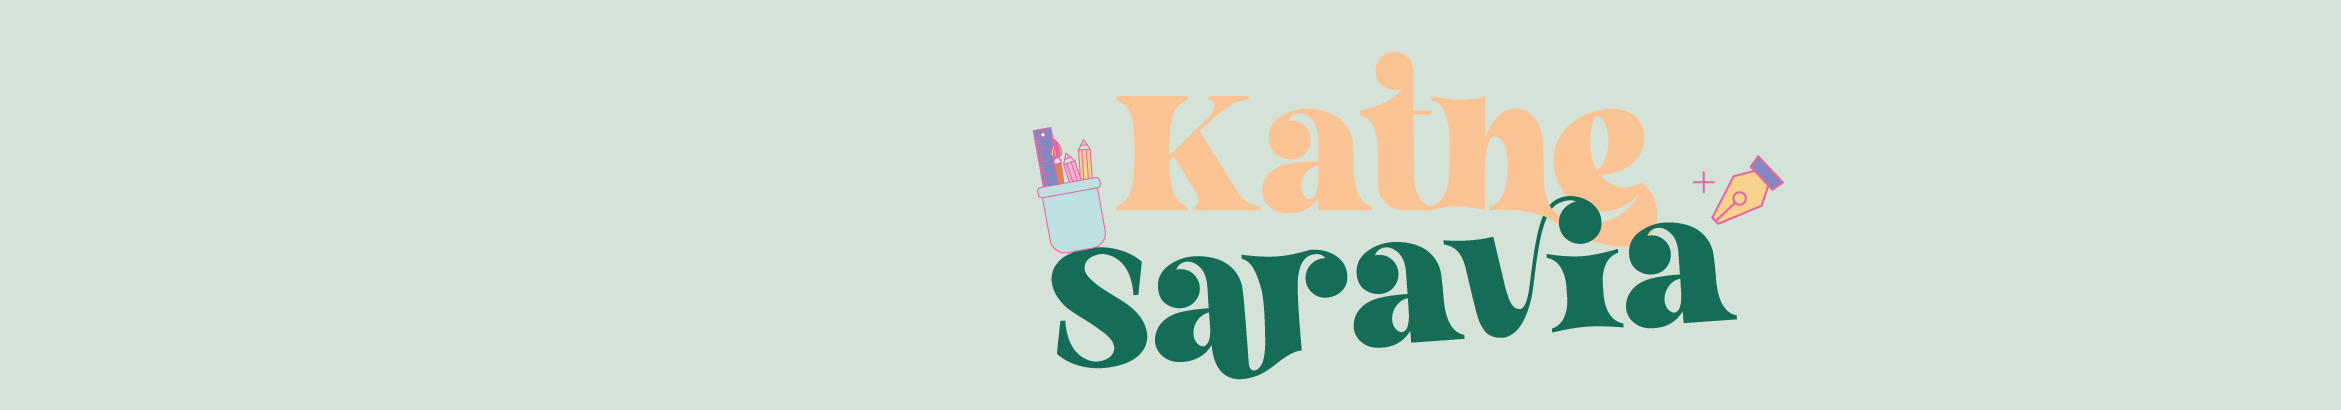 Banner de perfil de Kathe Saravia